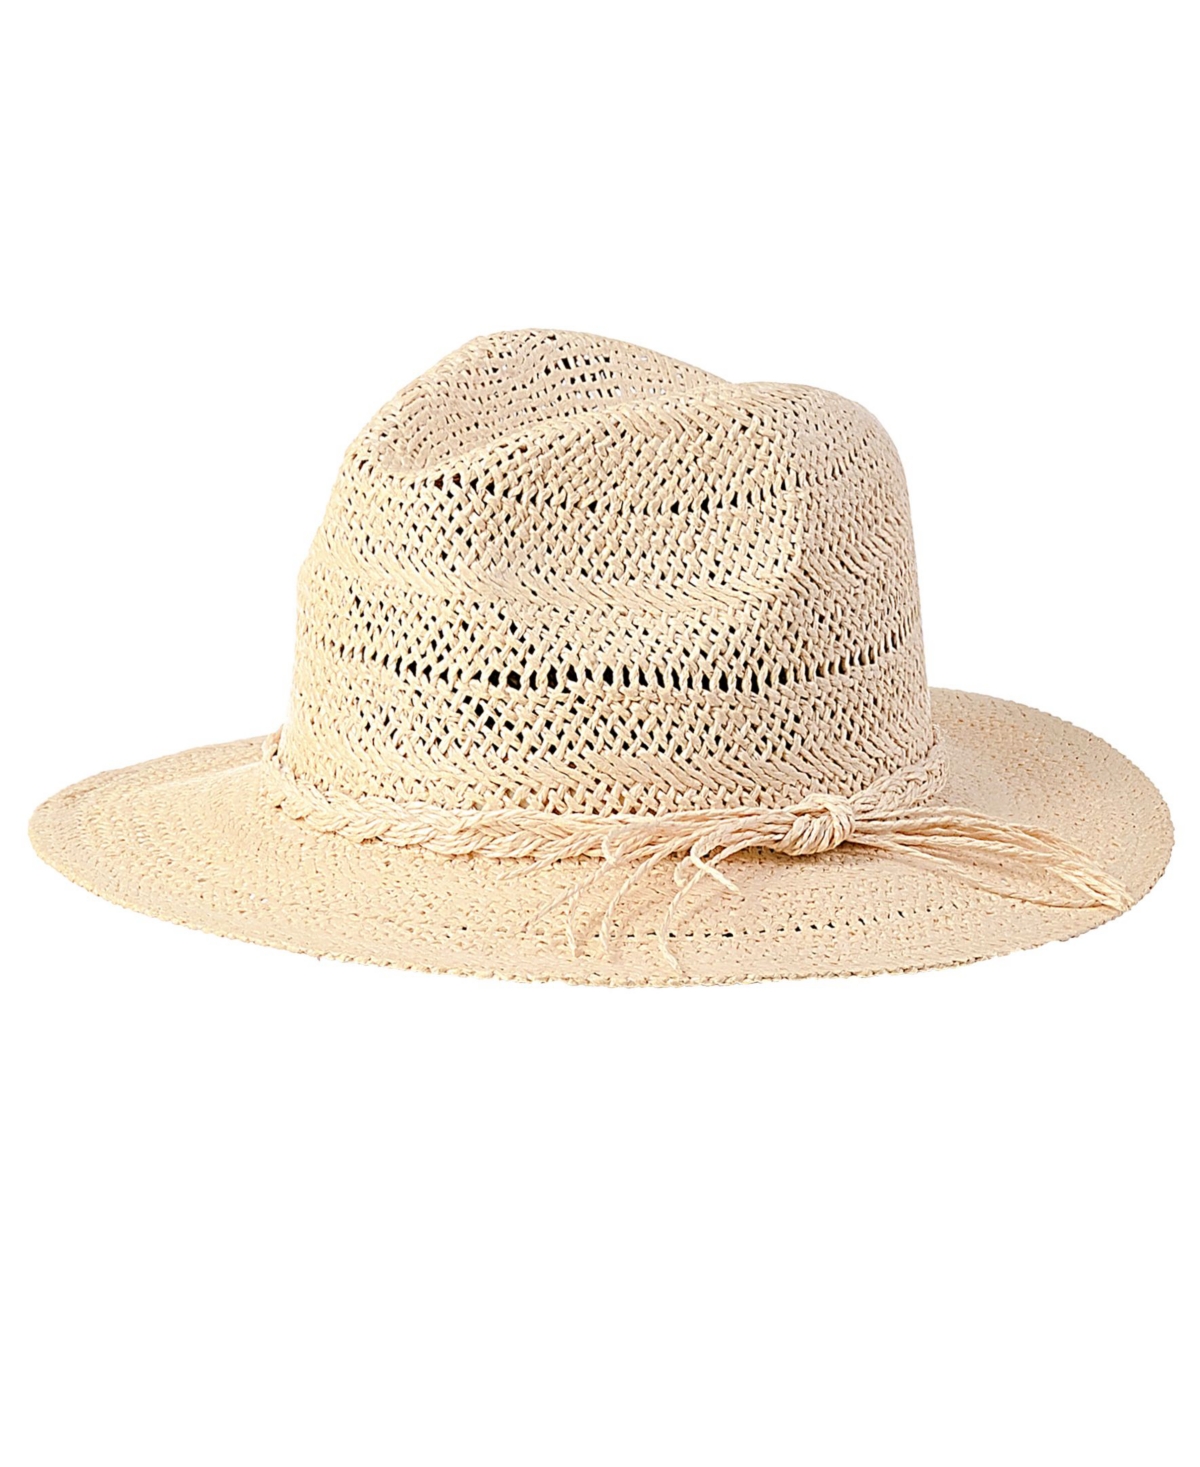 Marcus Adler Women's Straw Panama Hat In Natural